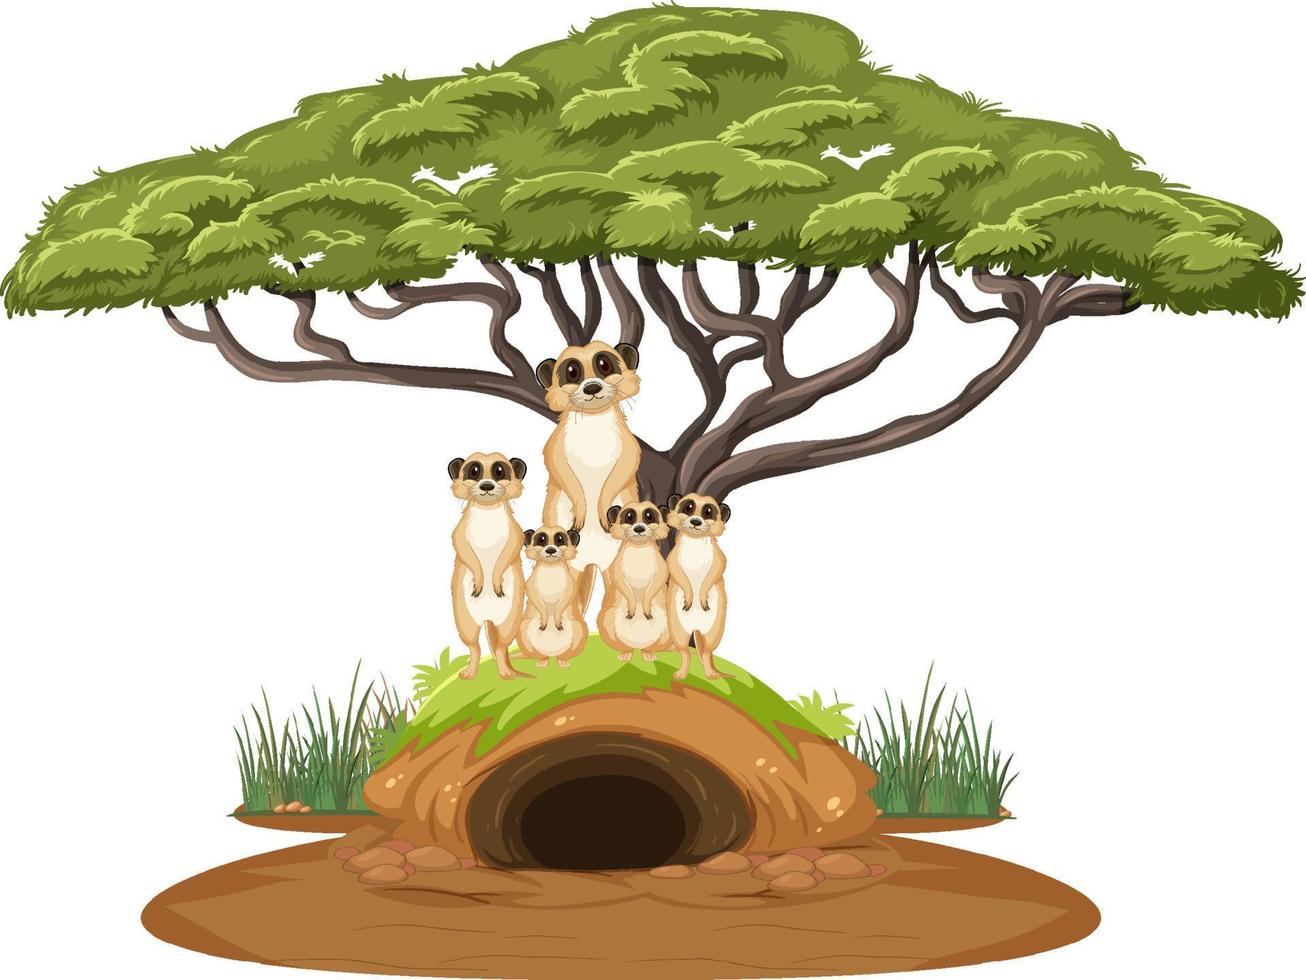 Group of meerkats with burrow in cartoon style vector